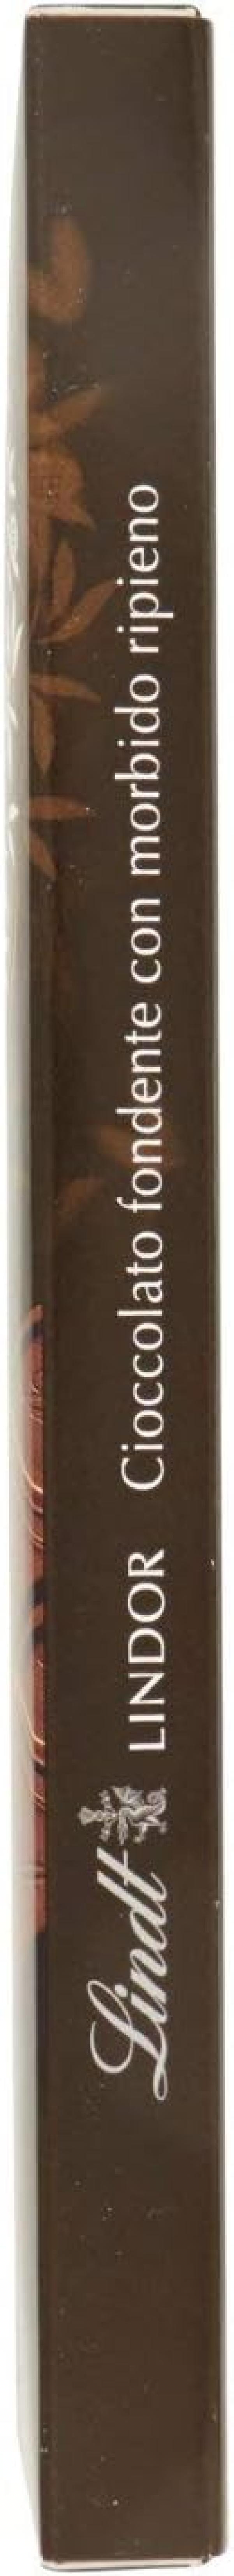 tavoletta-di-cioccolato-fondente-60-lindt-lindor-100gr-4